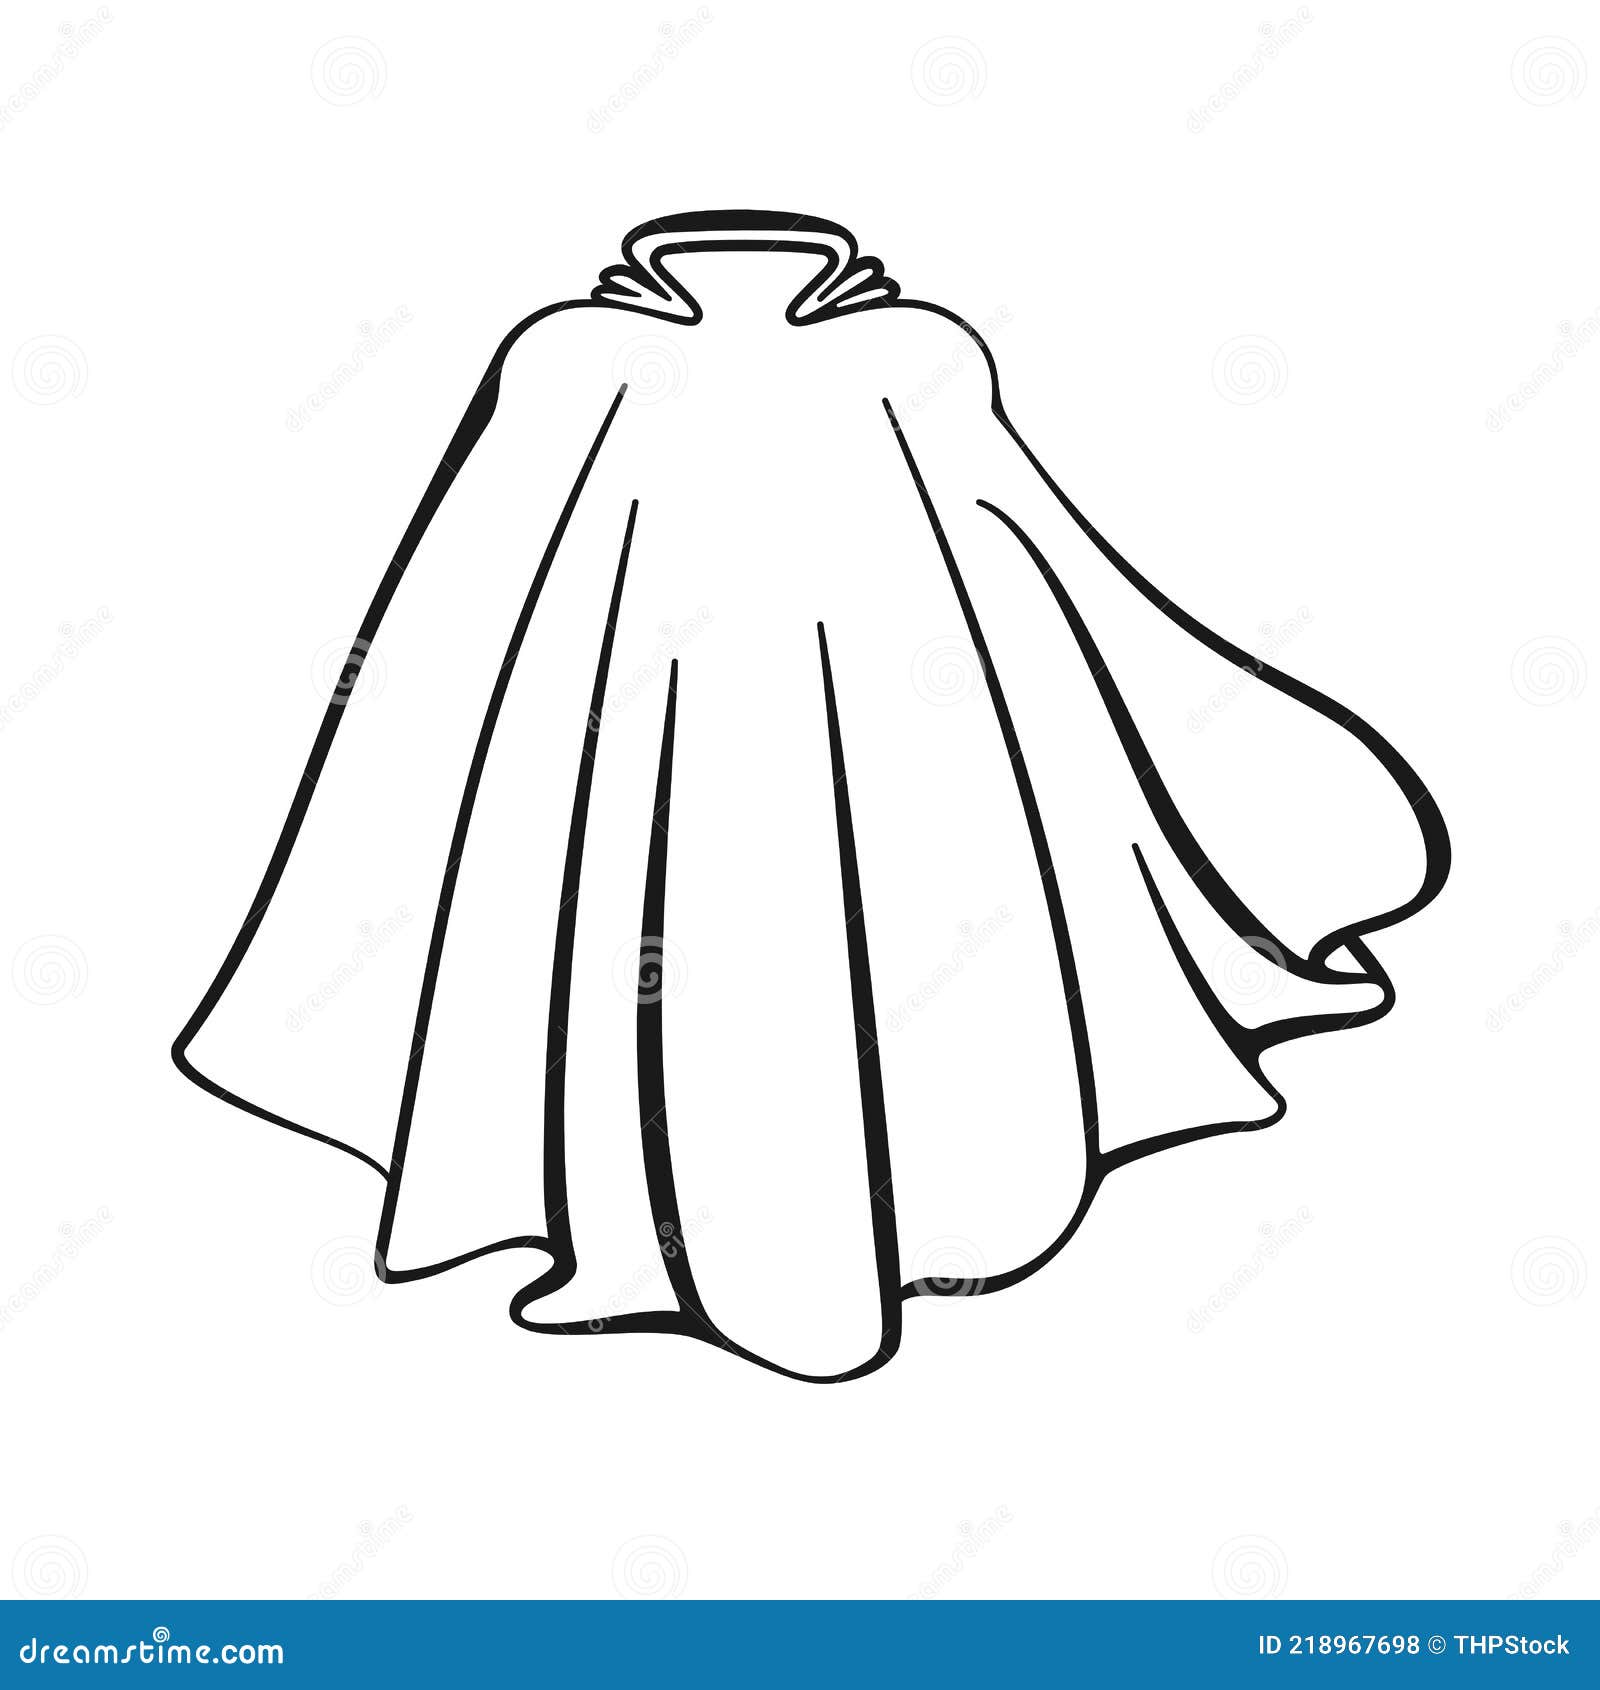 superhero cape clipart